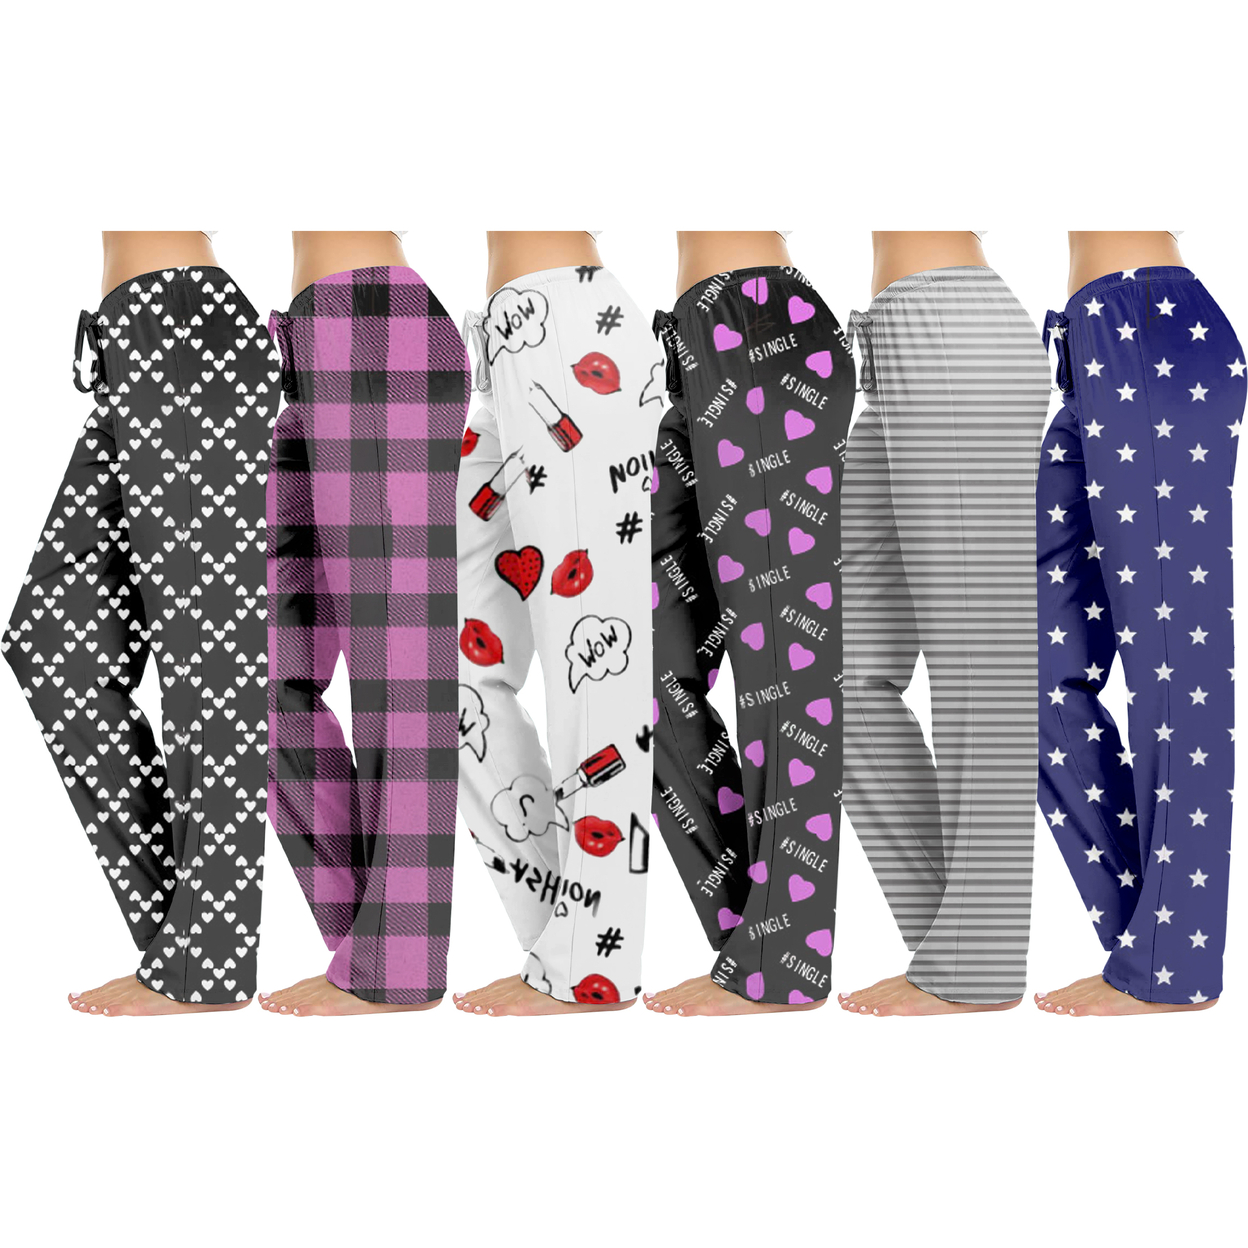 5-Pack: Women's Casual Fun Printed Lightweight Lounge Terry Knit Pajama Bottom Pants - Medium, Love